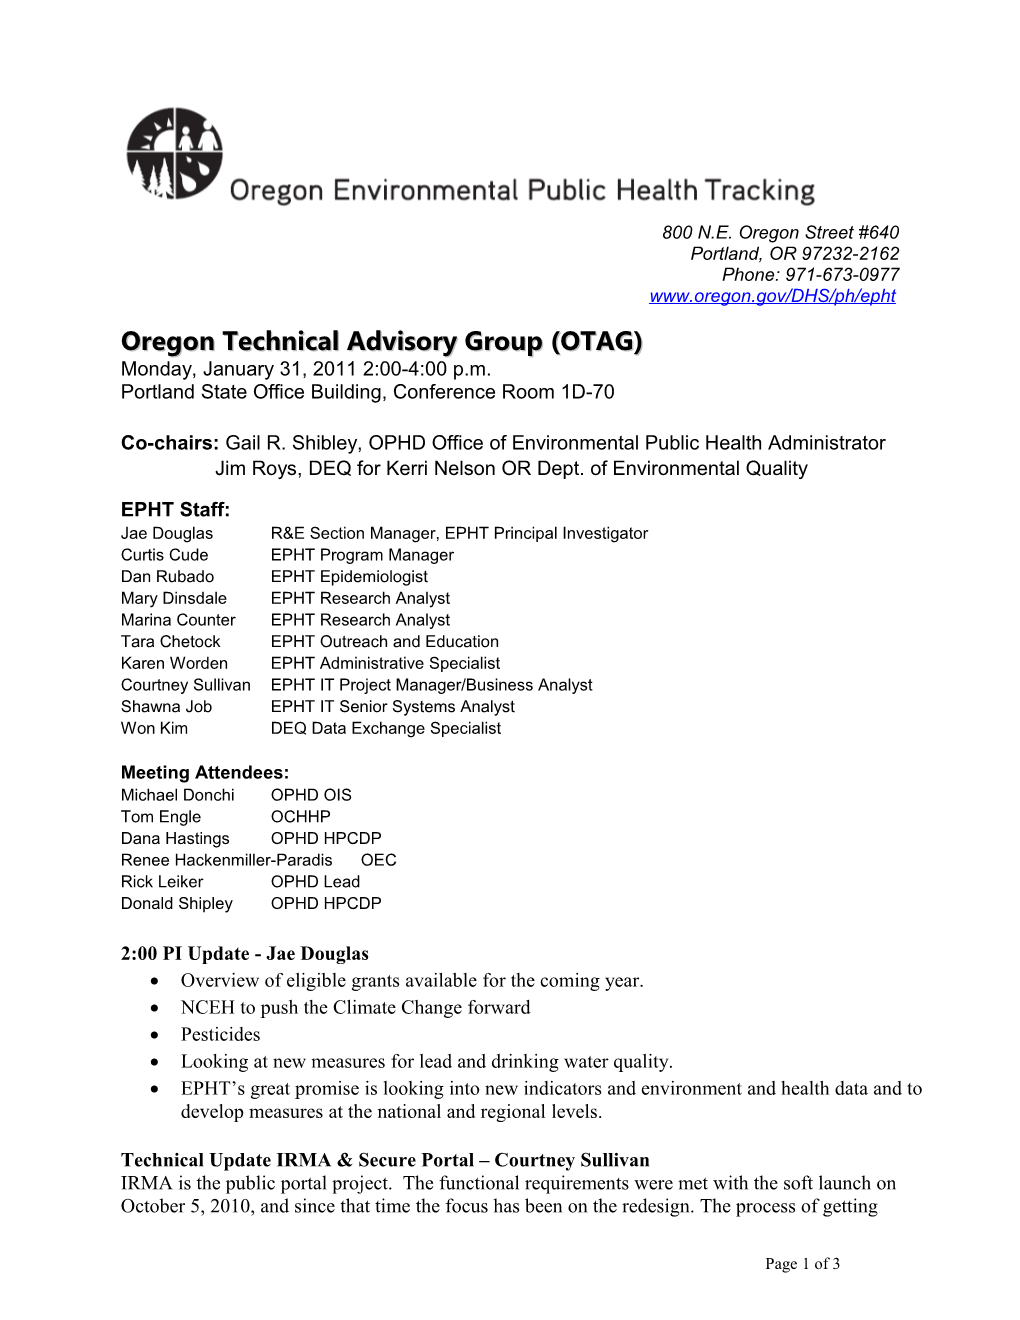 Oregon Technical Advisory Group (OTAG)